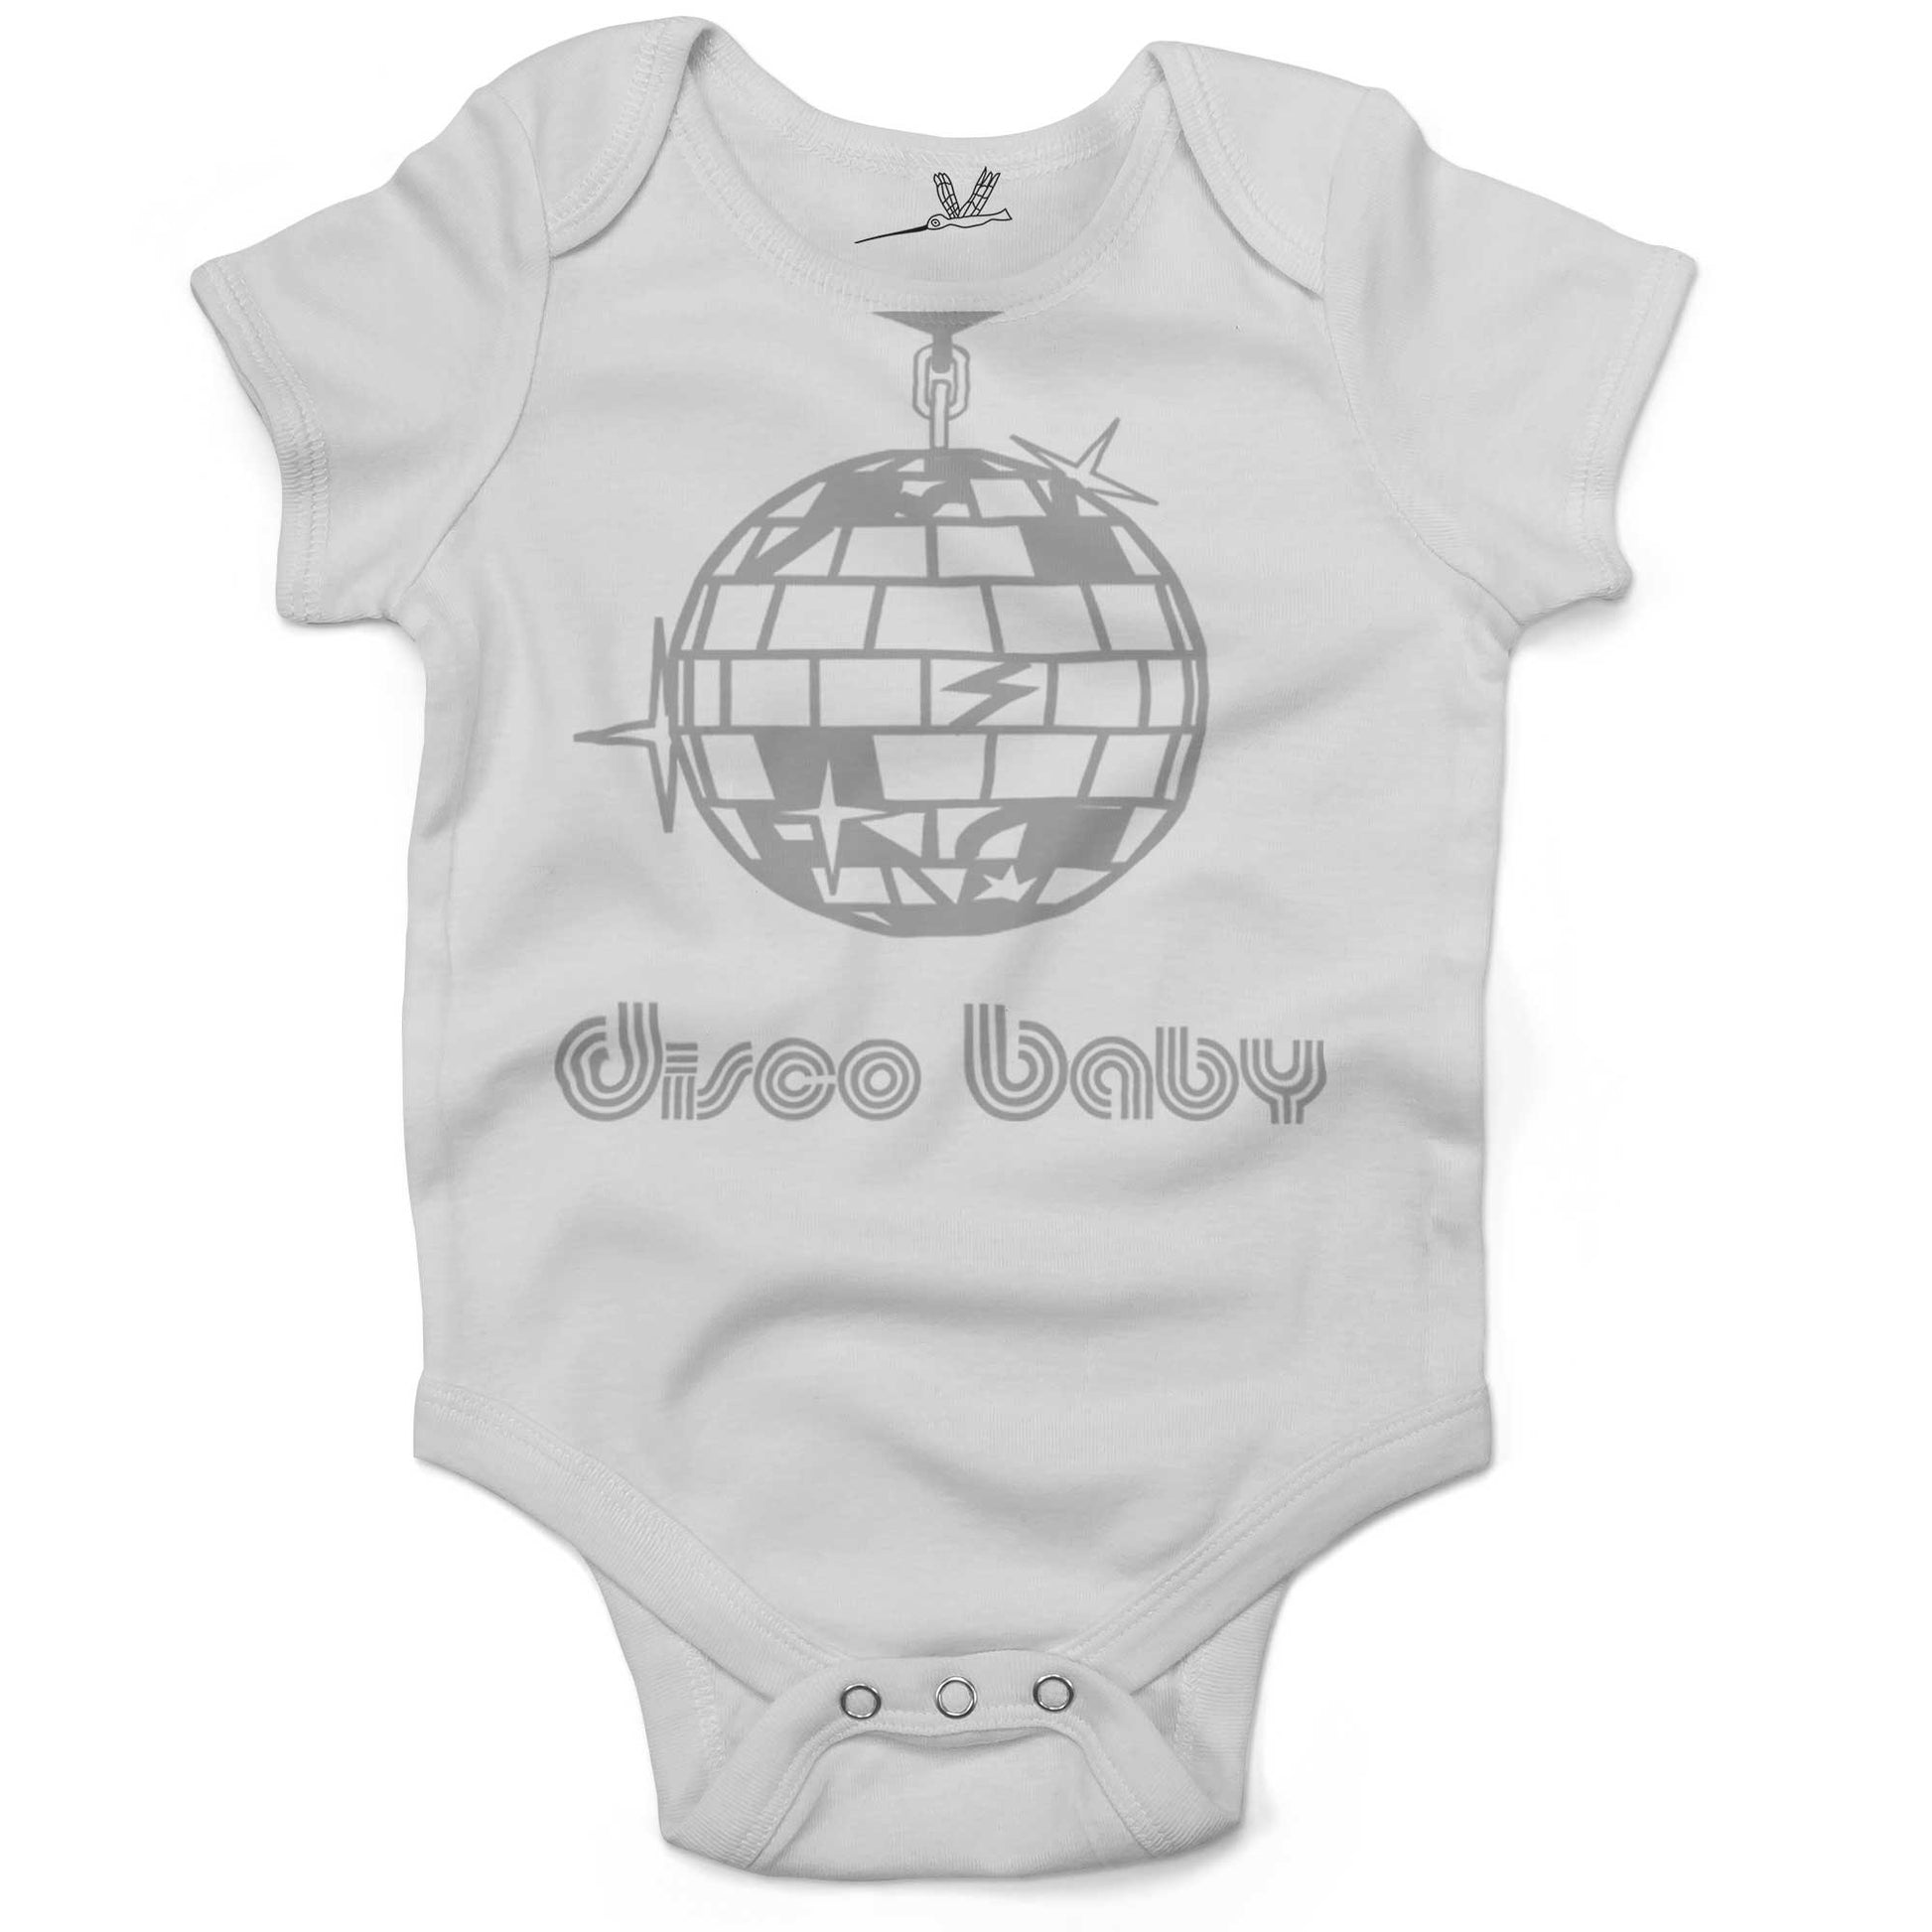 Disco Baby Infant Bodysuit or Raglan Tee-White-3-6 months